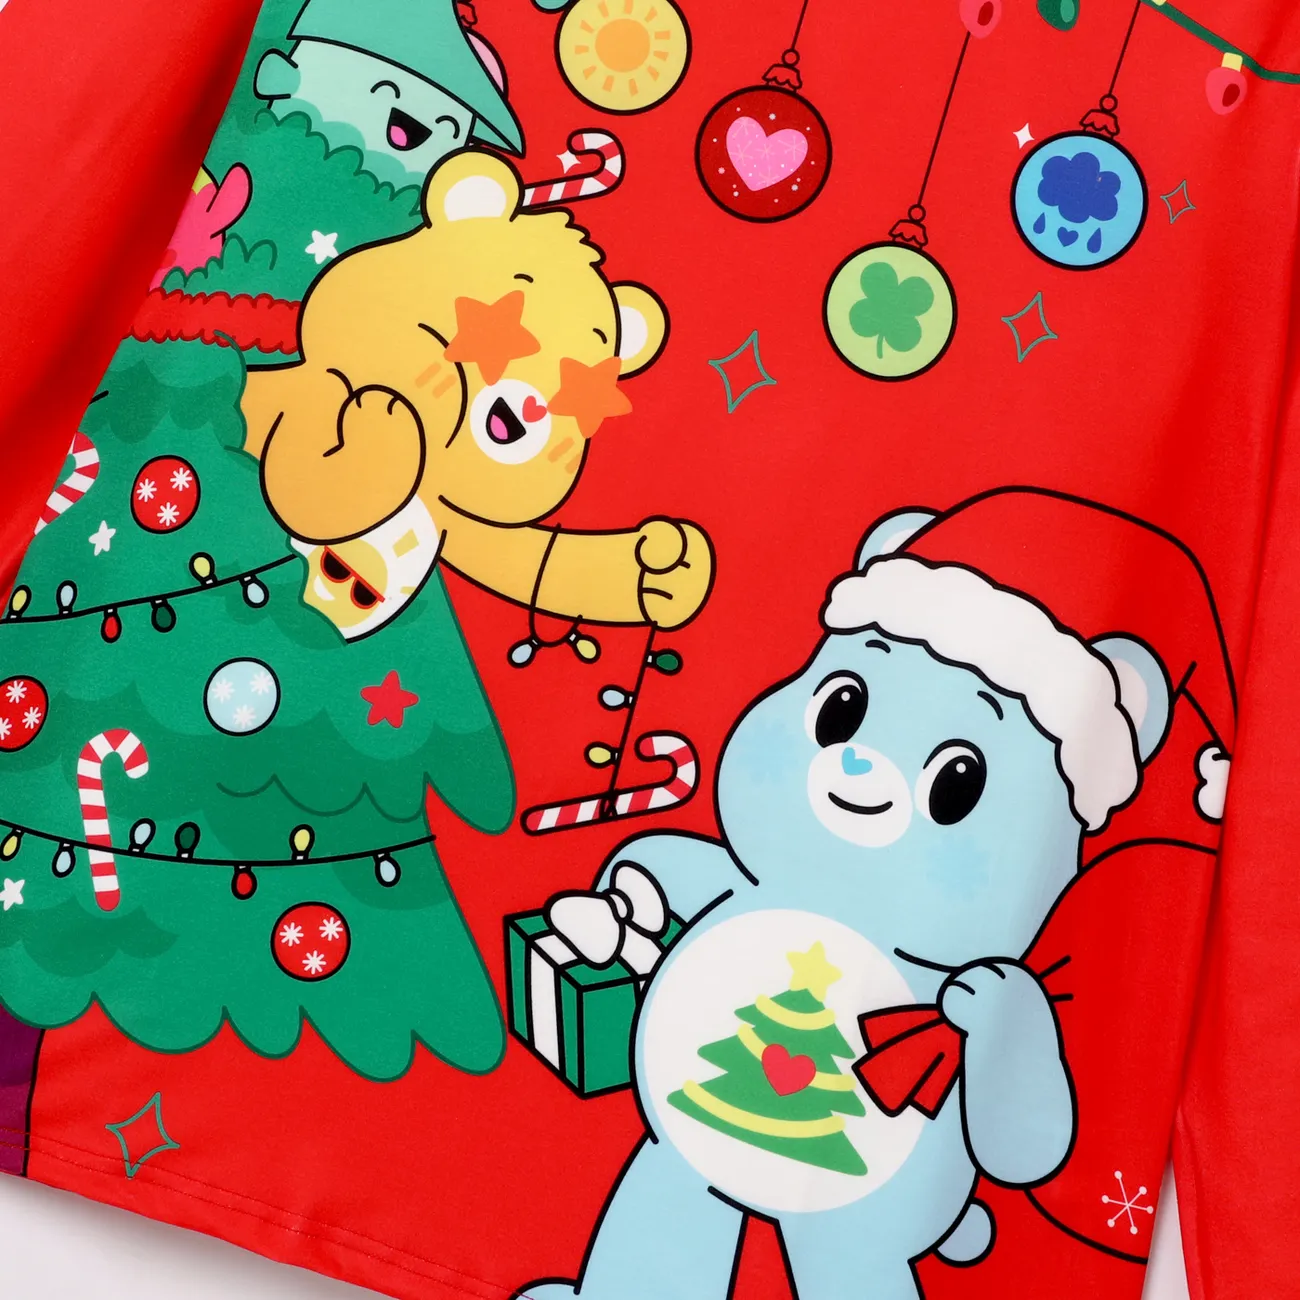 Glücksbärchis Weihnachten Familien-Looks Langärmelig Familien-Outfits Pyjamas (Flame Resistant) rot big image 1